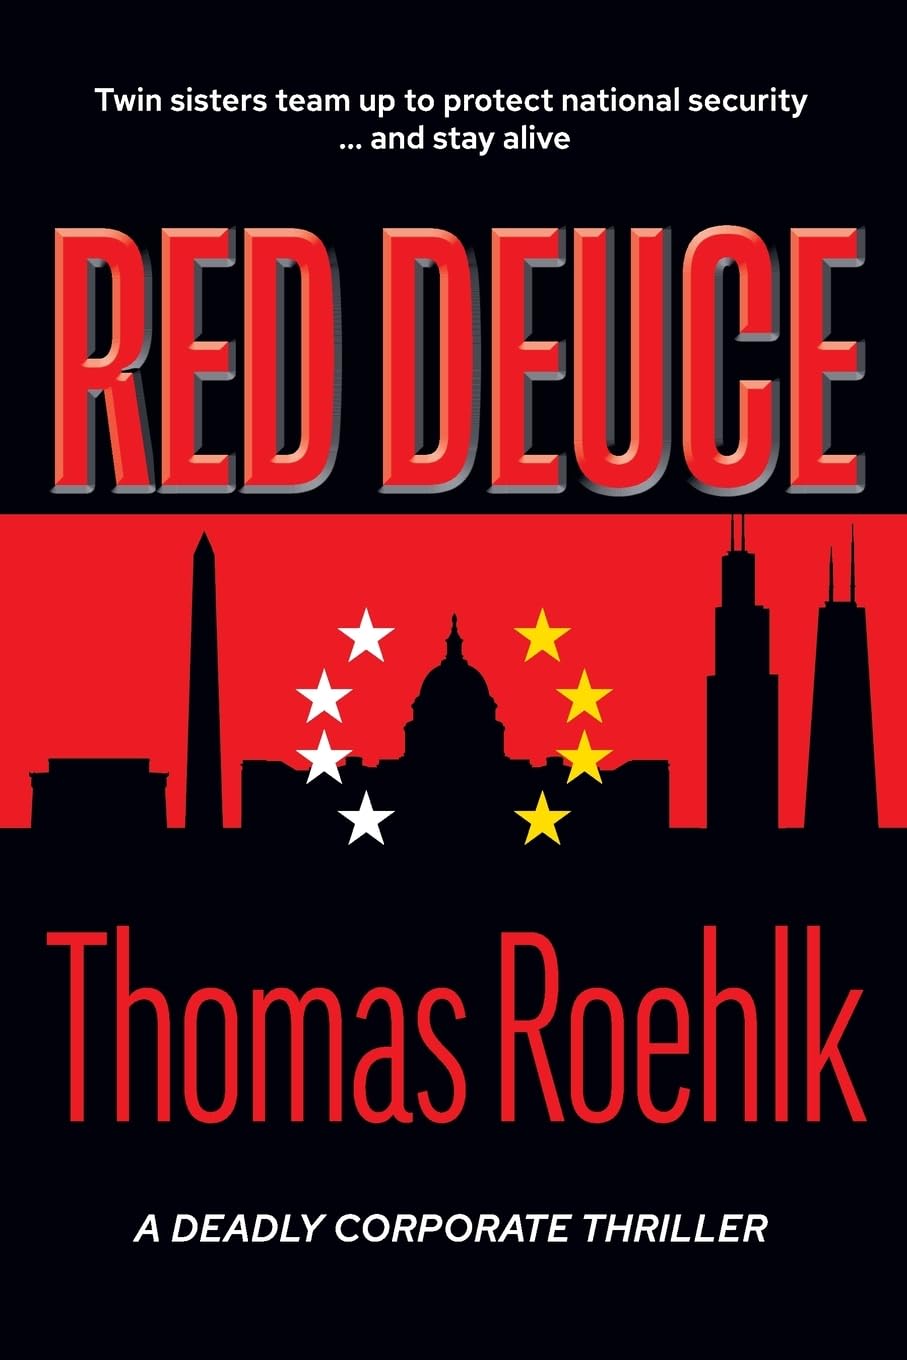 Red Deuce by Thomas Roehlk